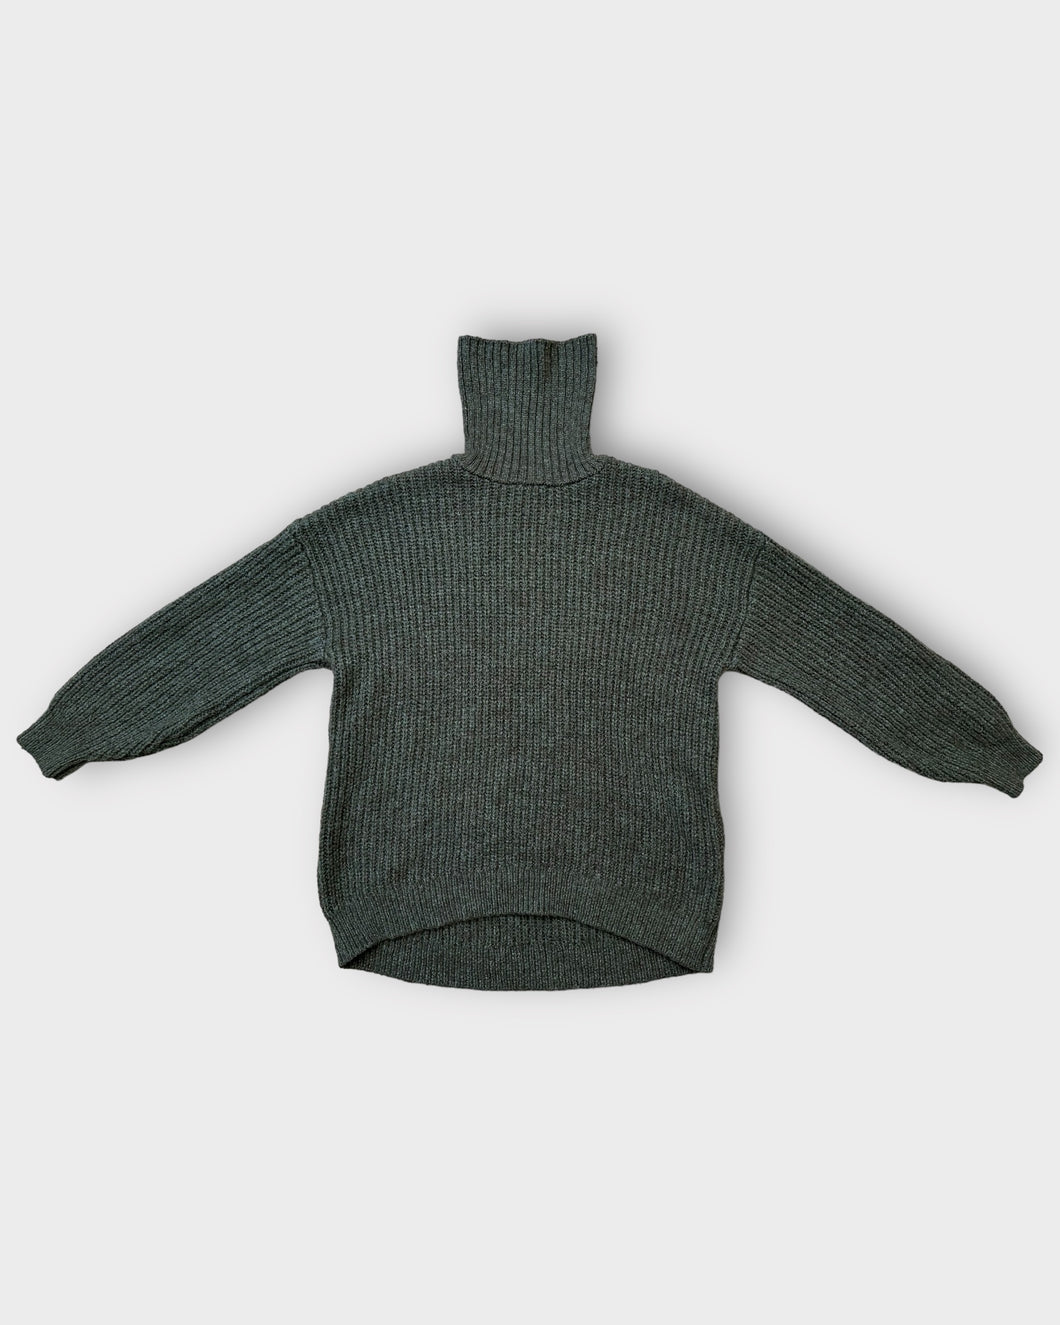 Old Navy Green Turtleneck Sweater (M)